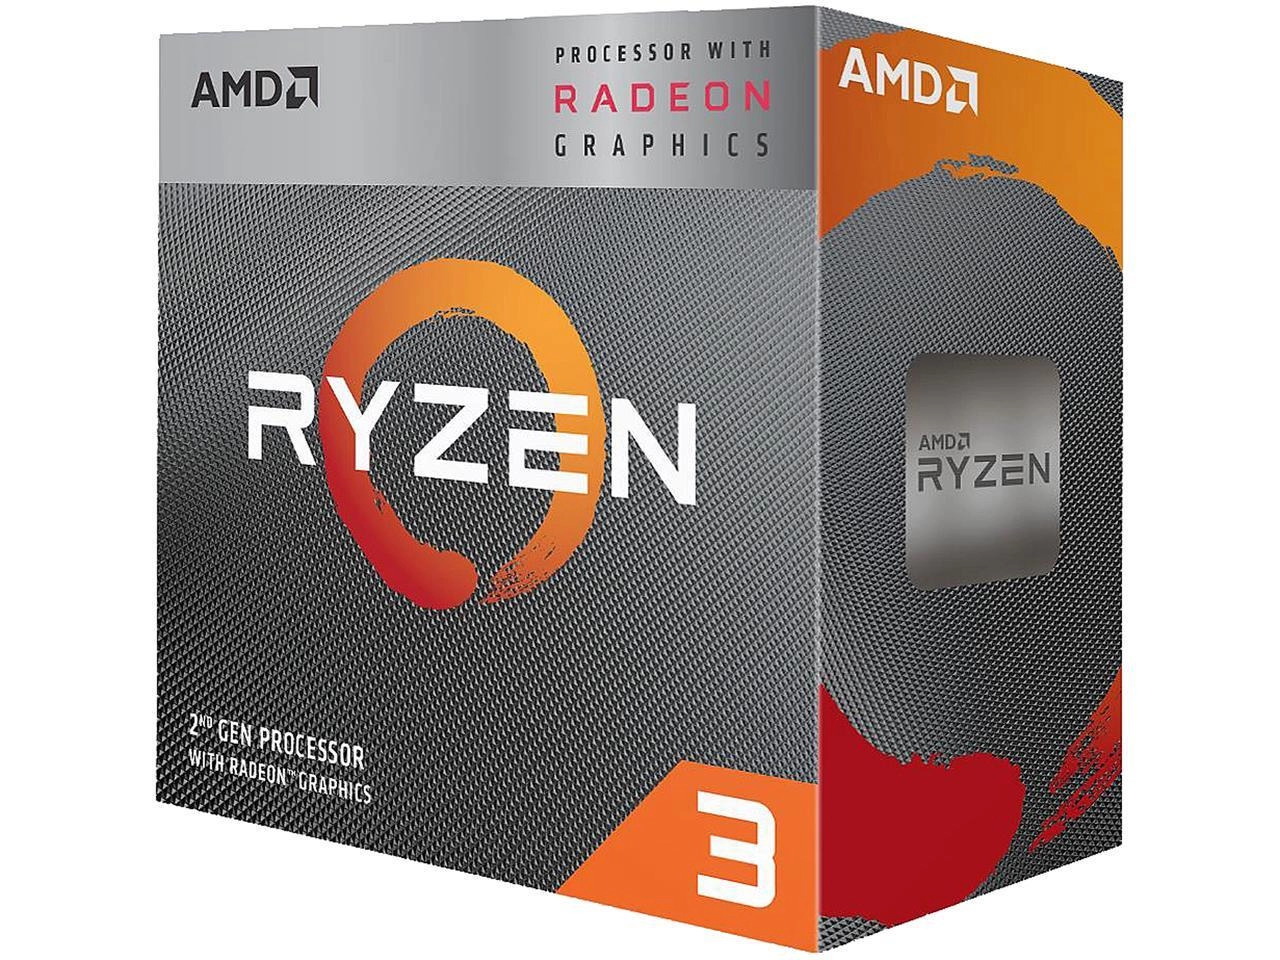 AMD Ryzen™ 3 3200G, Socket AM4, 3.6-4.0GHz (4C/4T), 2MB L2 + 4MB L3 Cache, Integrated Radeon™ Vega 8 Graphics, 12nm 65W, Box (with Wraith Stealth Cooler)